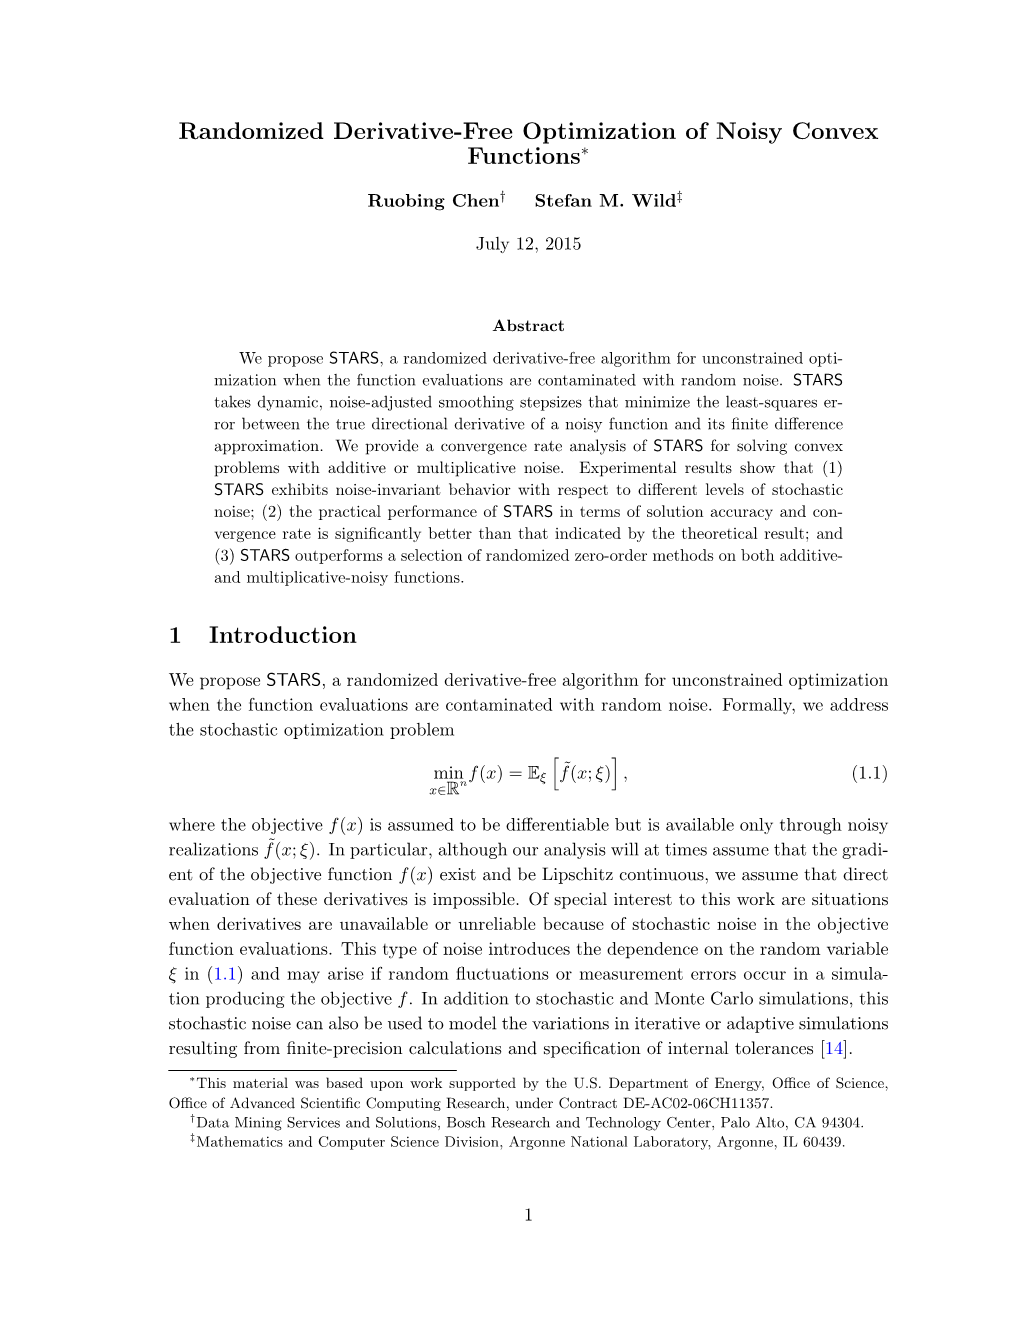 Randomized Derivative-Free Optimization of Noisy Convex Functions∗